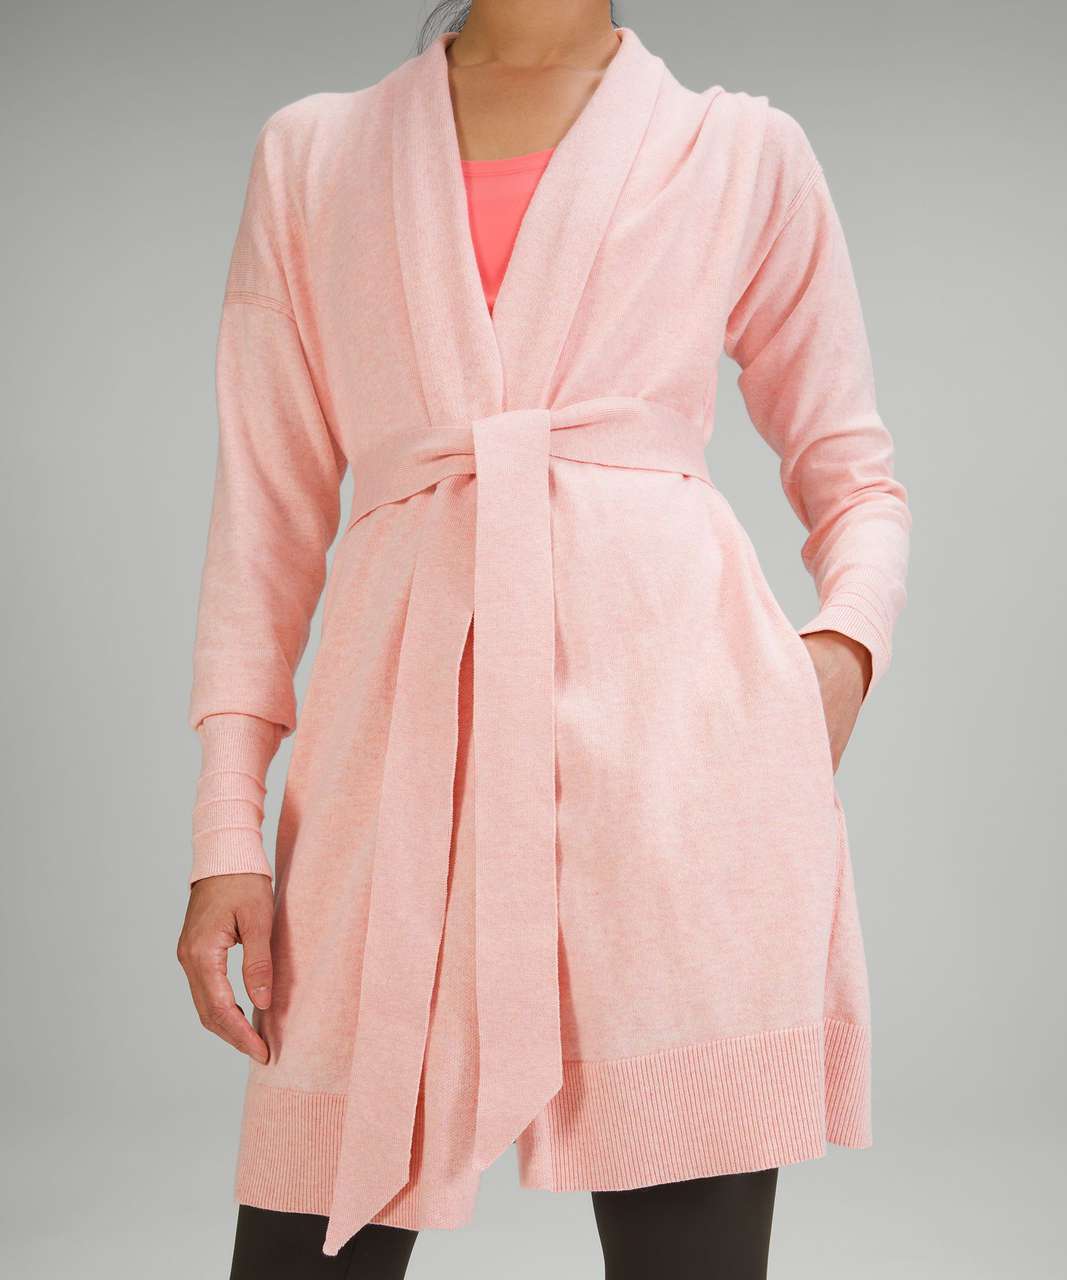 Lululemon Cotton-Cashmere Knit Wrap - Heathered Dew Pink